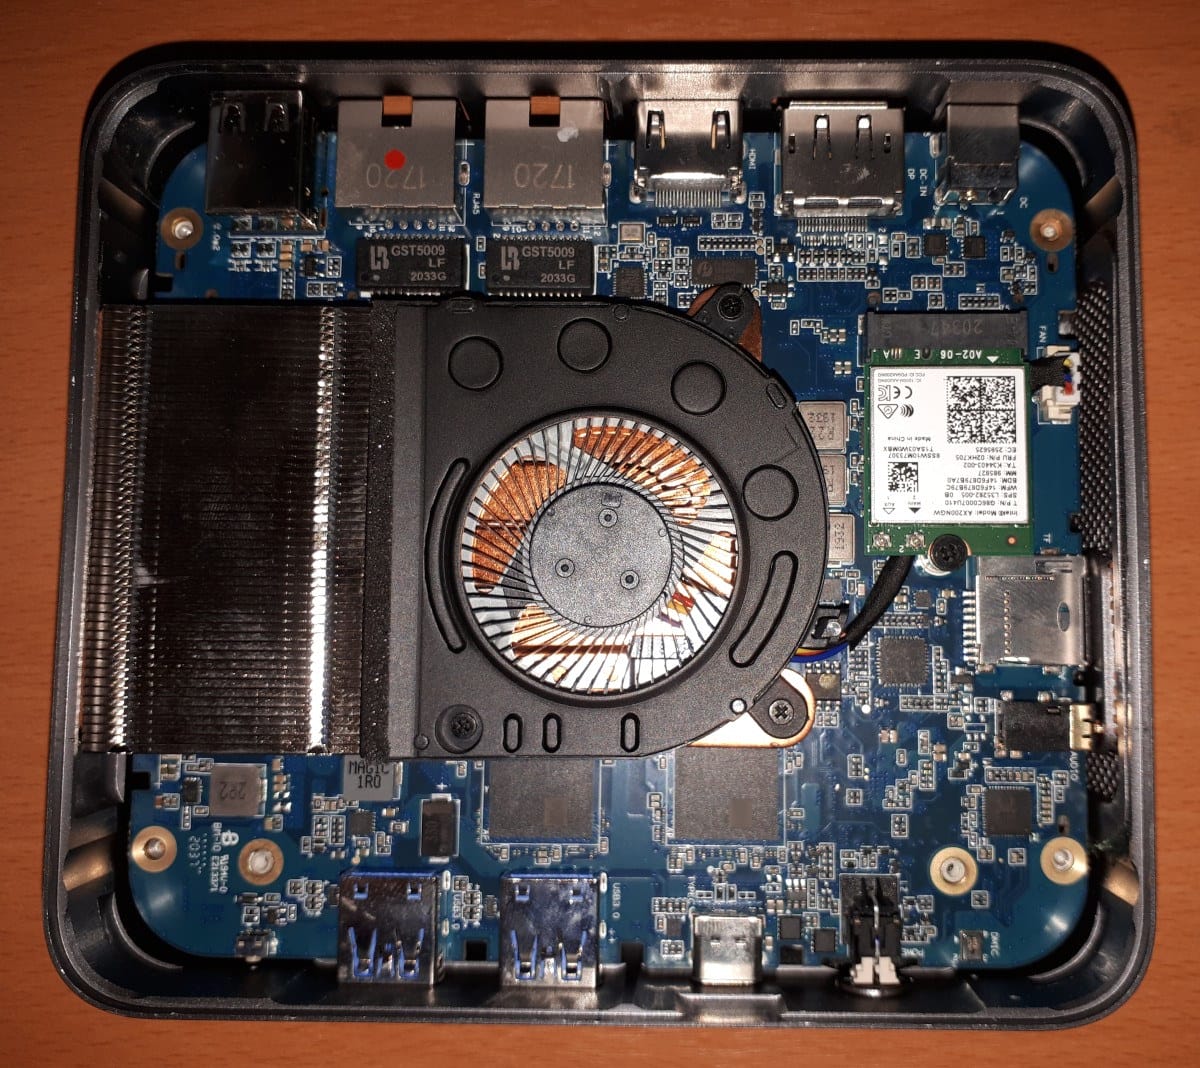 MINISFORUM X35G review - An Intel Core i3-1005G1 Mini PC tested